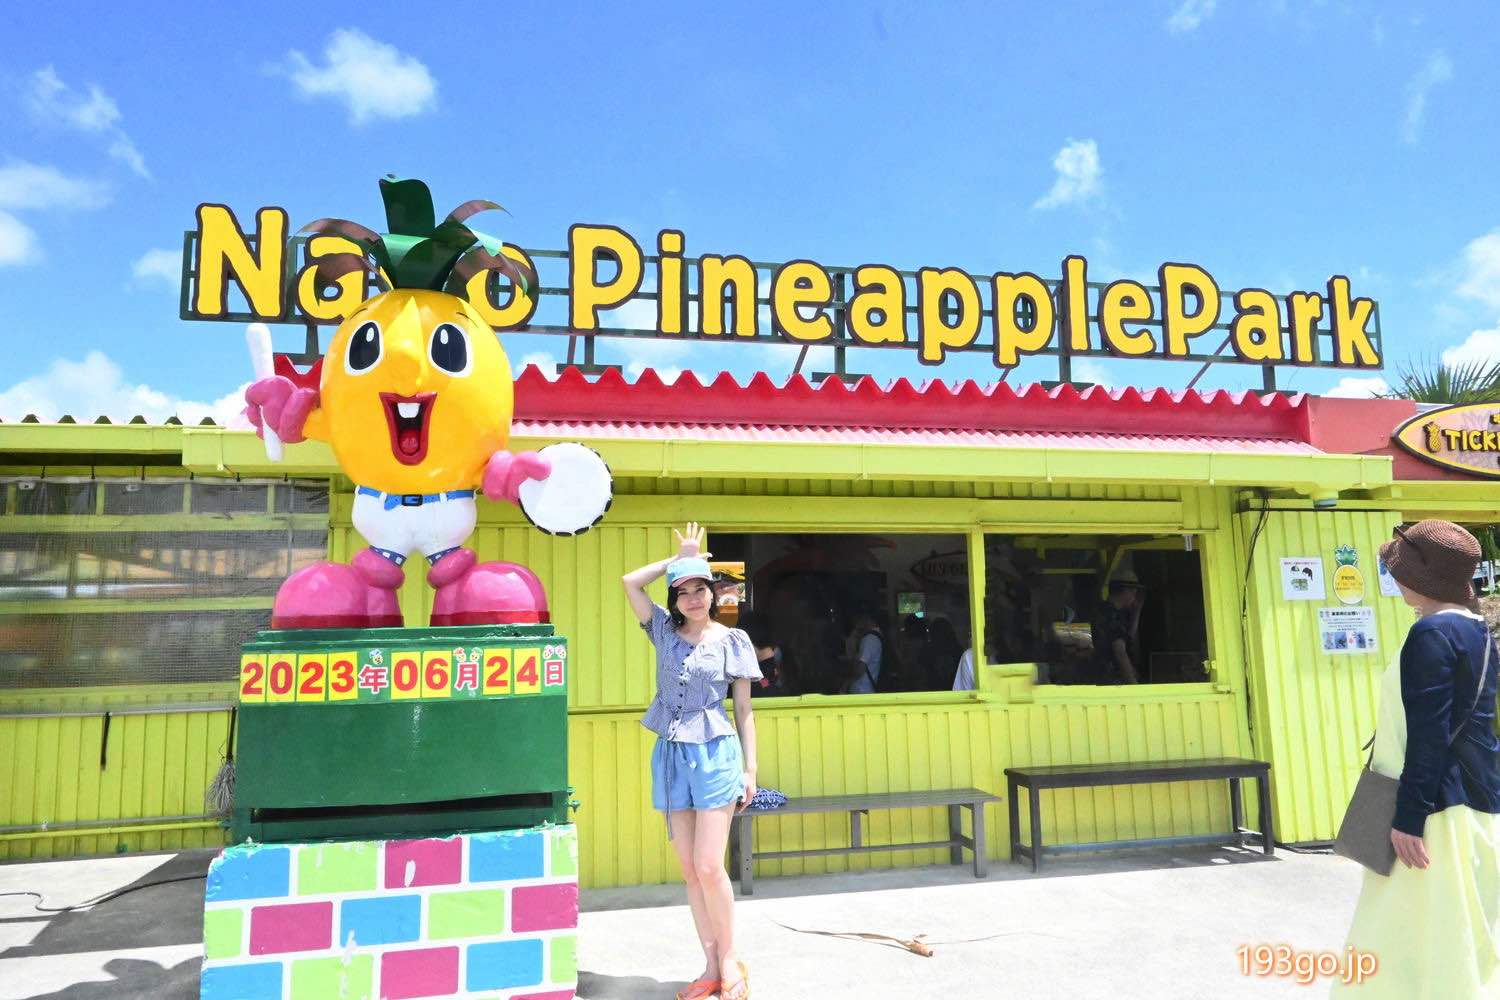 Nago City, Okinawa: A treasure trove of pineapple delicacies! Explore the tropical rainforest jungle at Nago Pineapple Park.